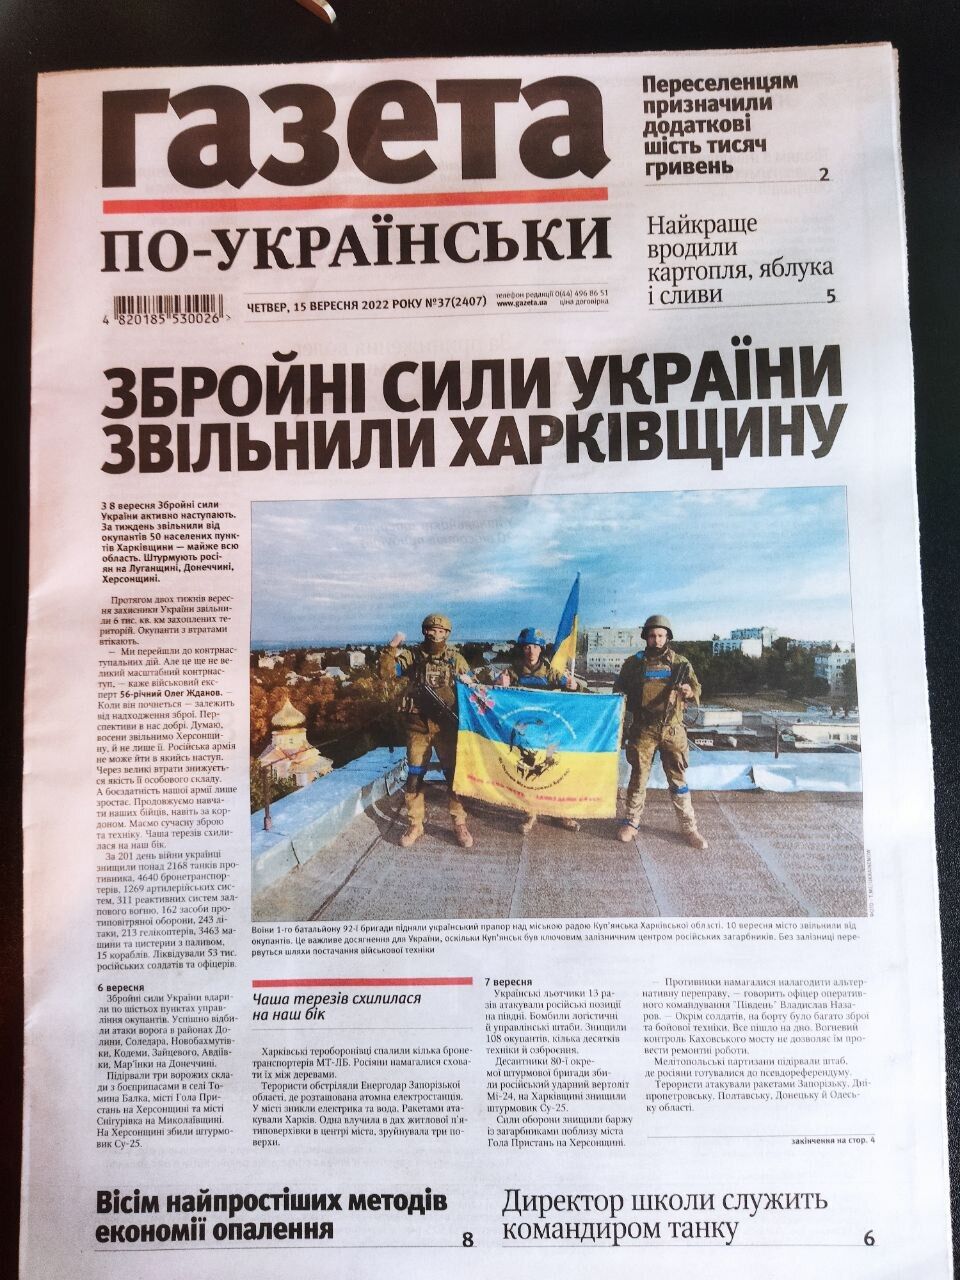 War in Ukraine 2022. Newspaper. The armed forces of Ukraine liberated Kharkiv Ob